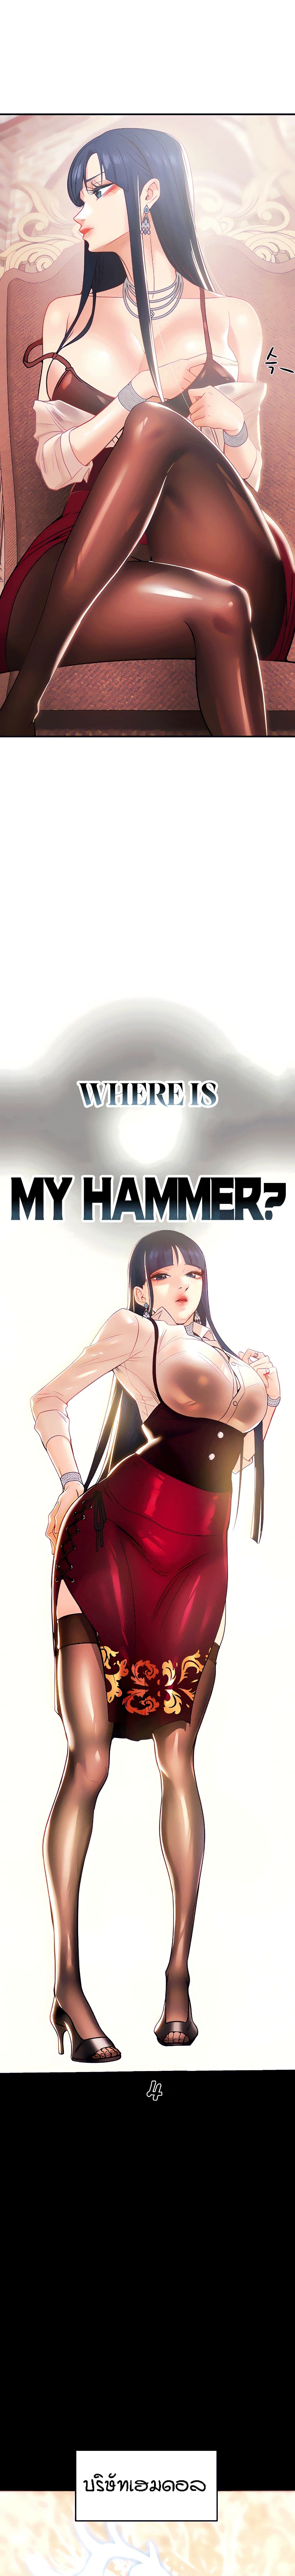 Where Did My Hammer Go 4 01